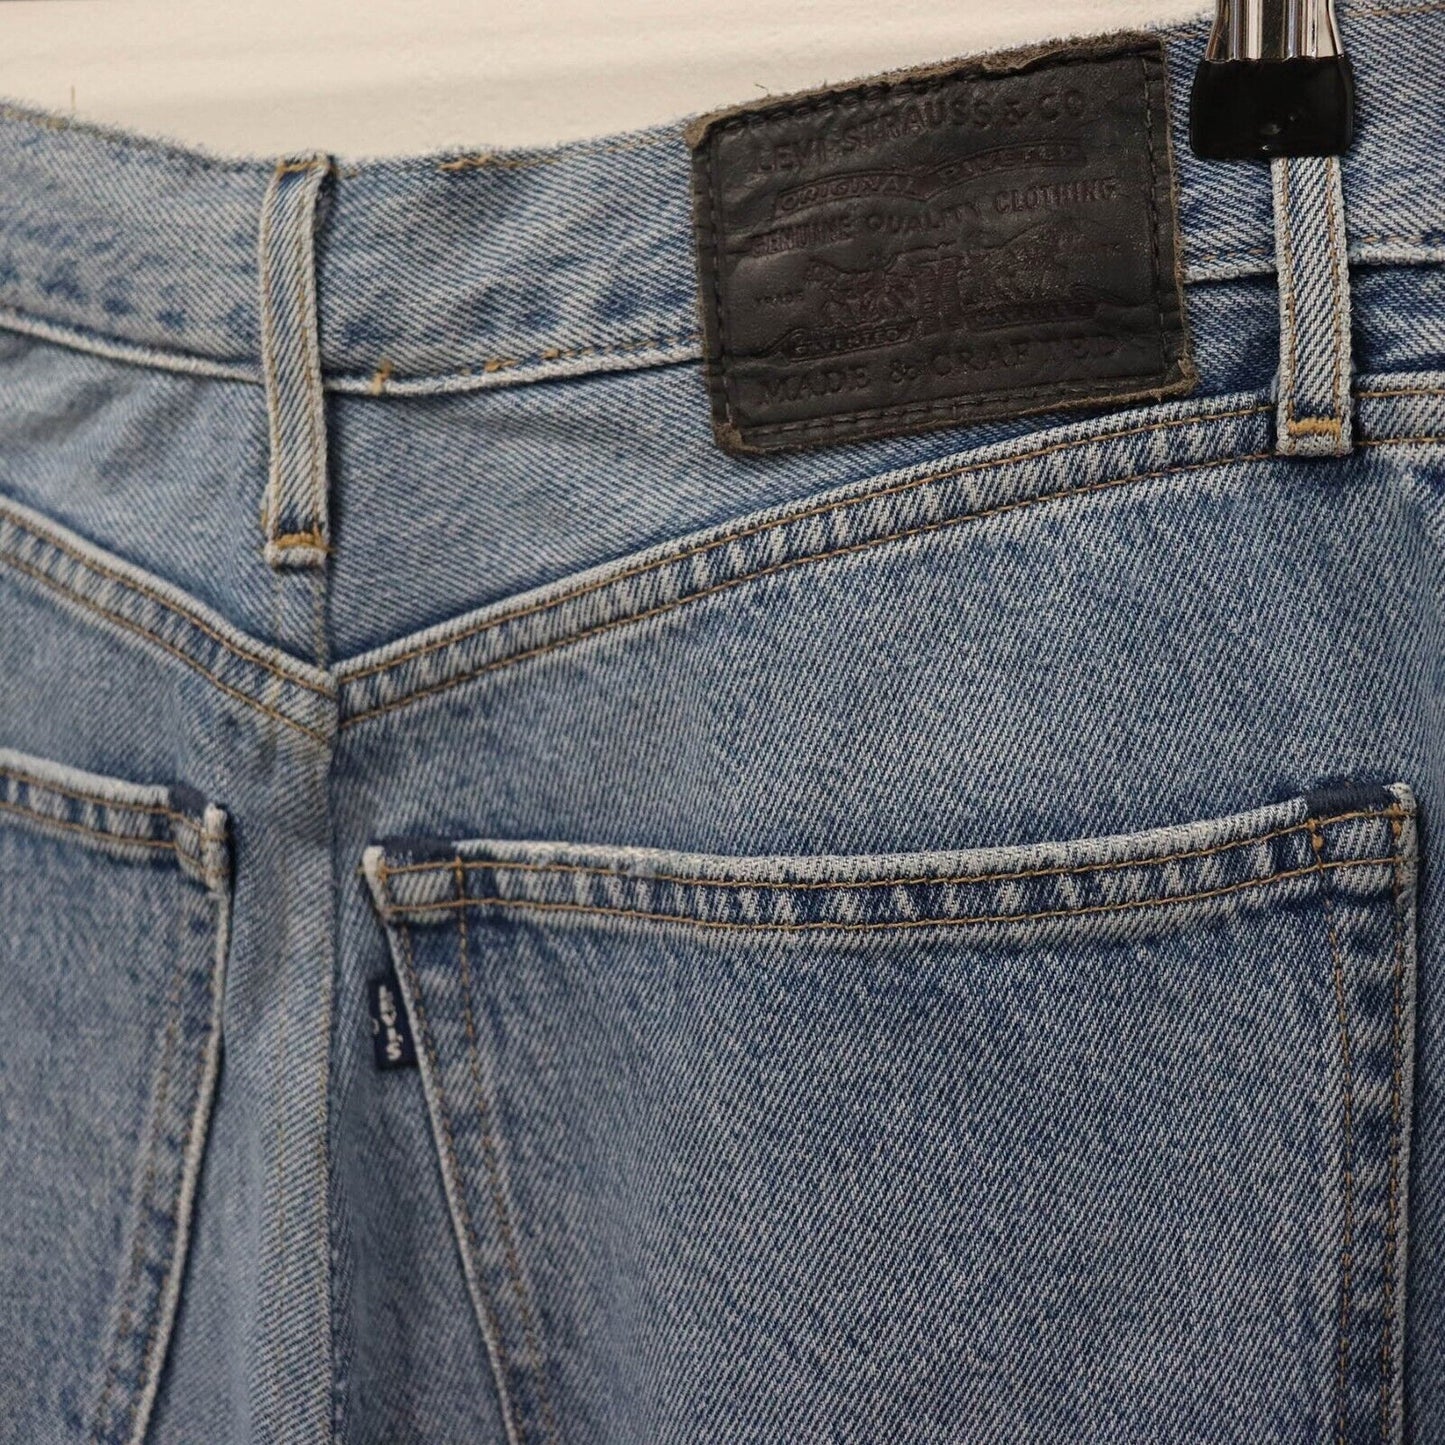 00s Levi’s Loose Taper Jeans Size UK 12 W30 L24